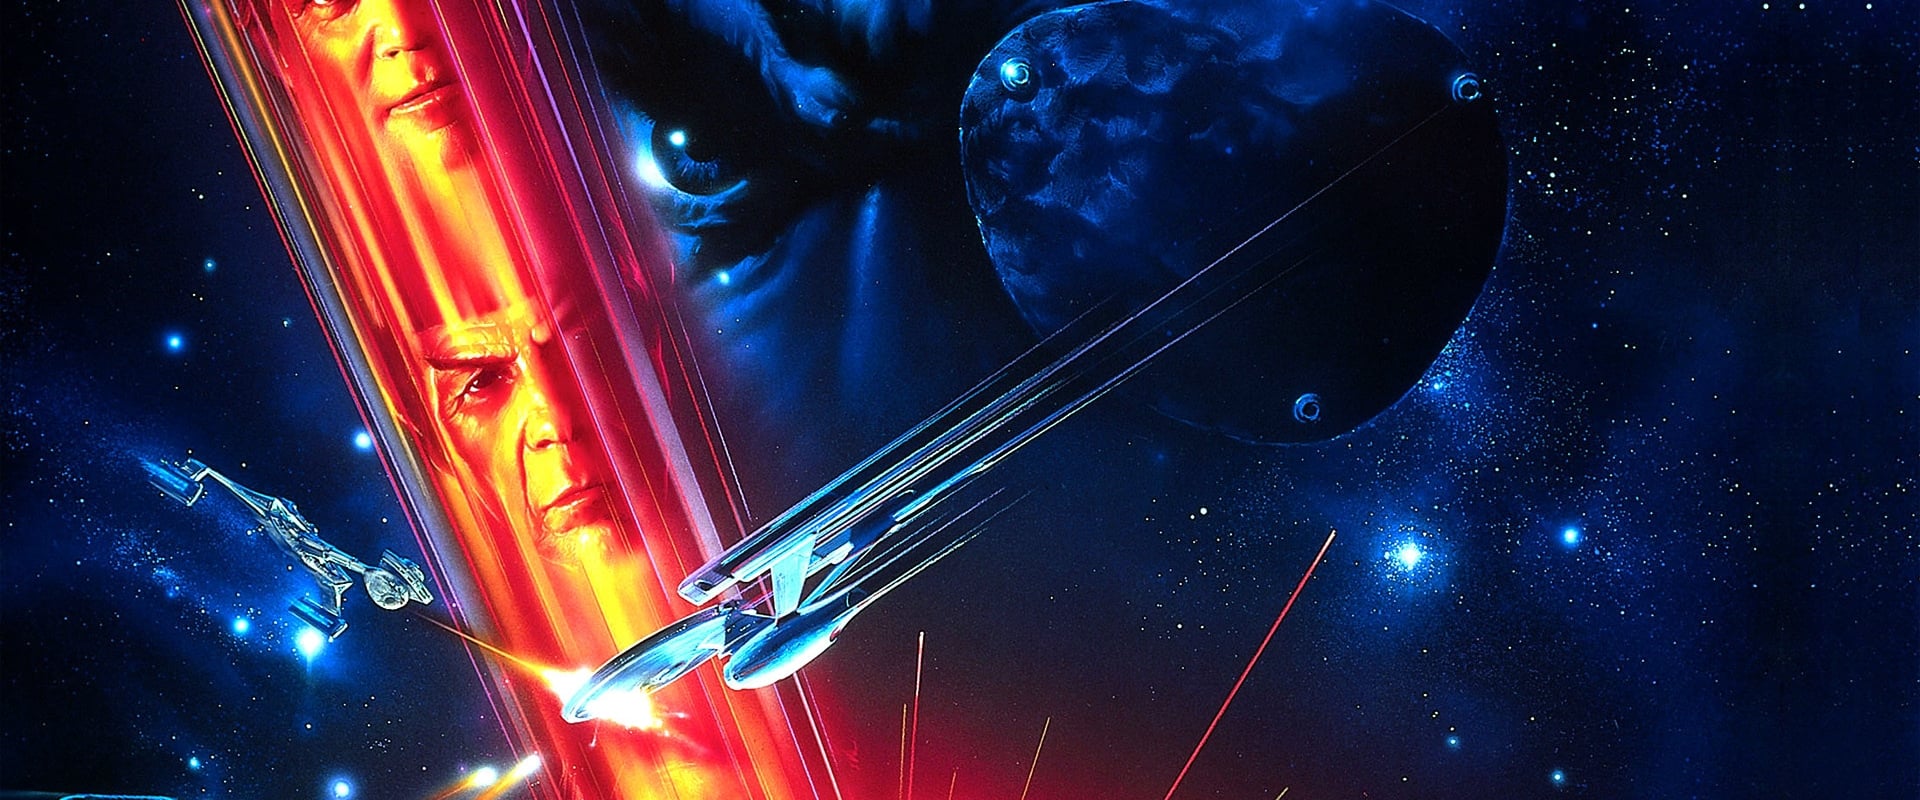 Star Trek VI : Terre inconnue